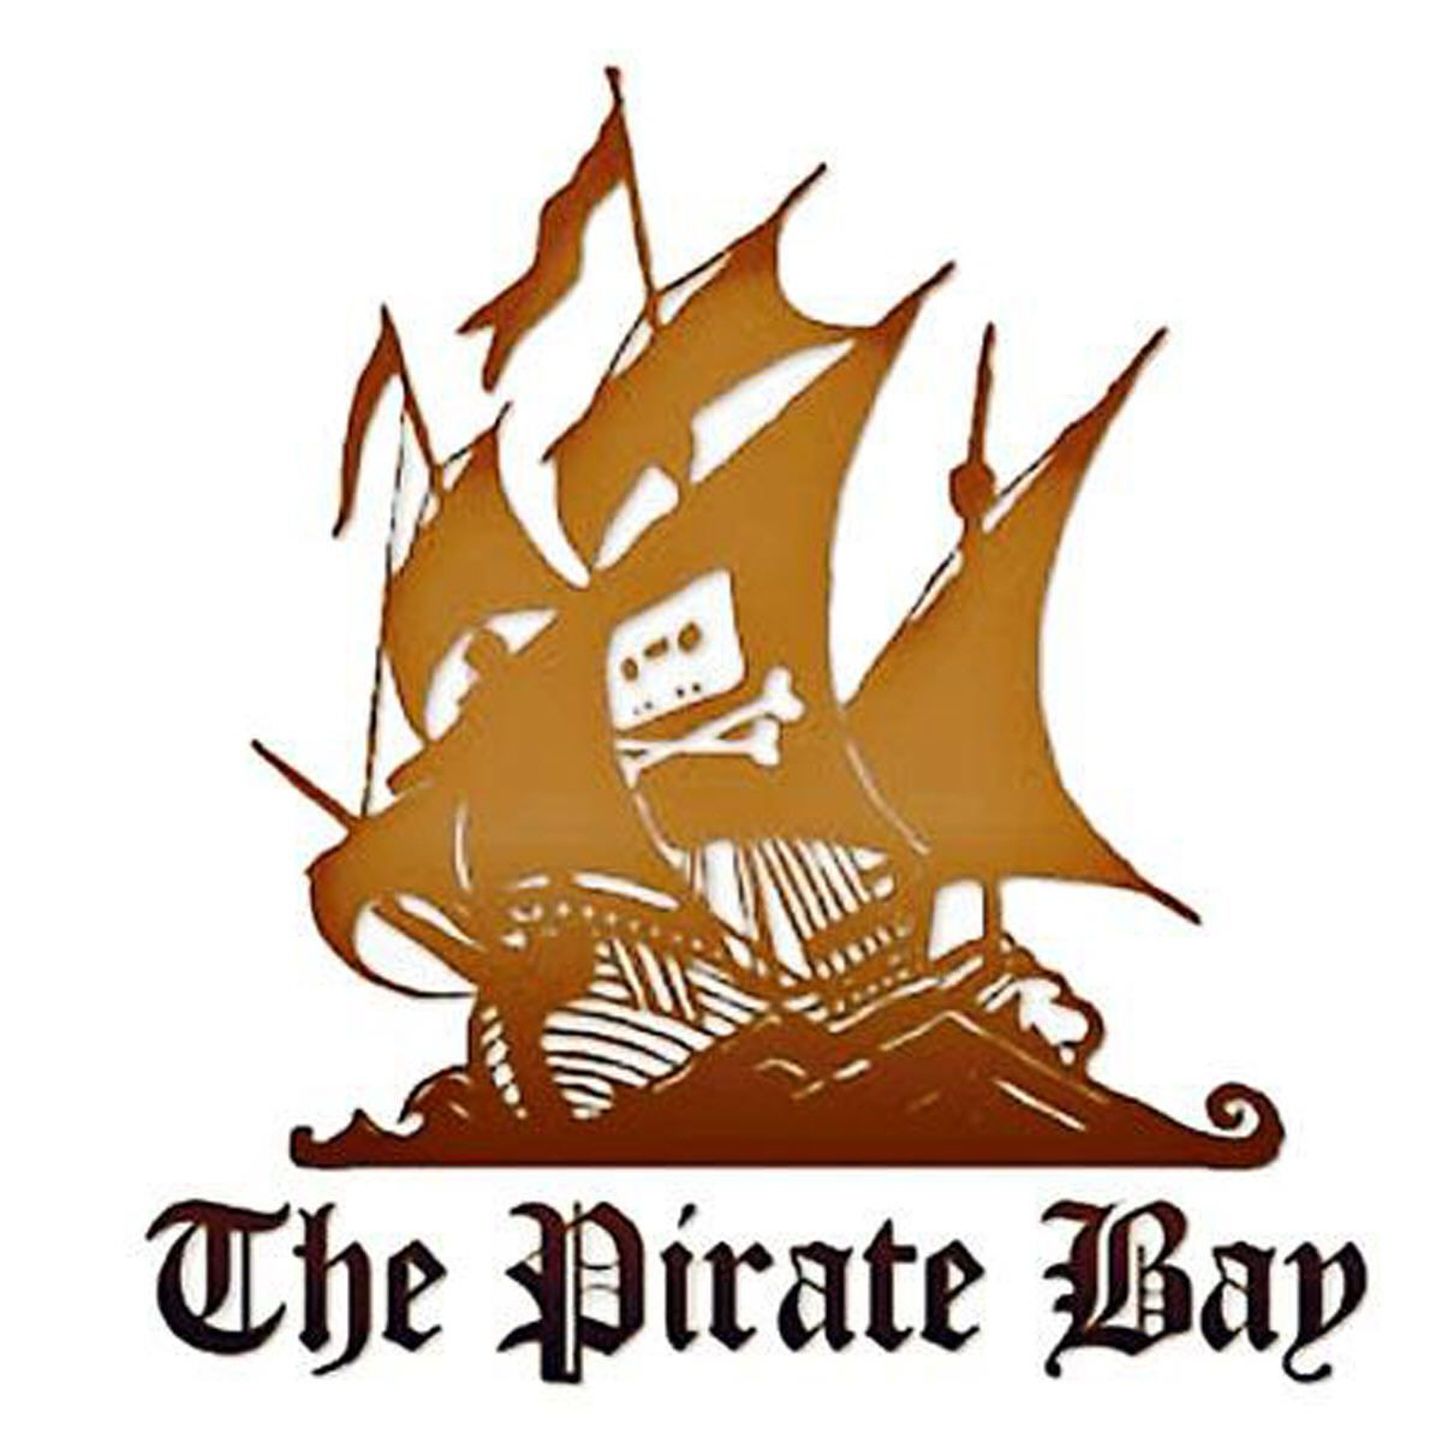 Логотип The Pirate Bay. Иллюстративное фото.